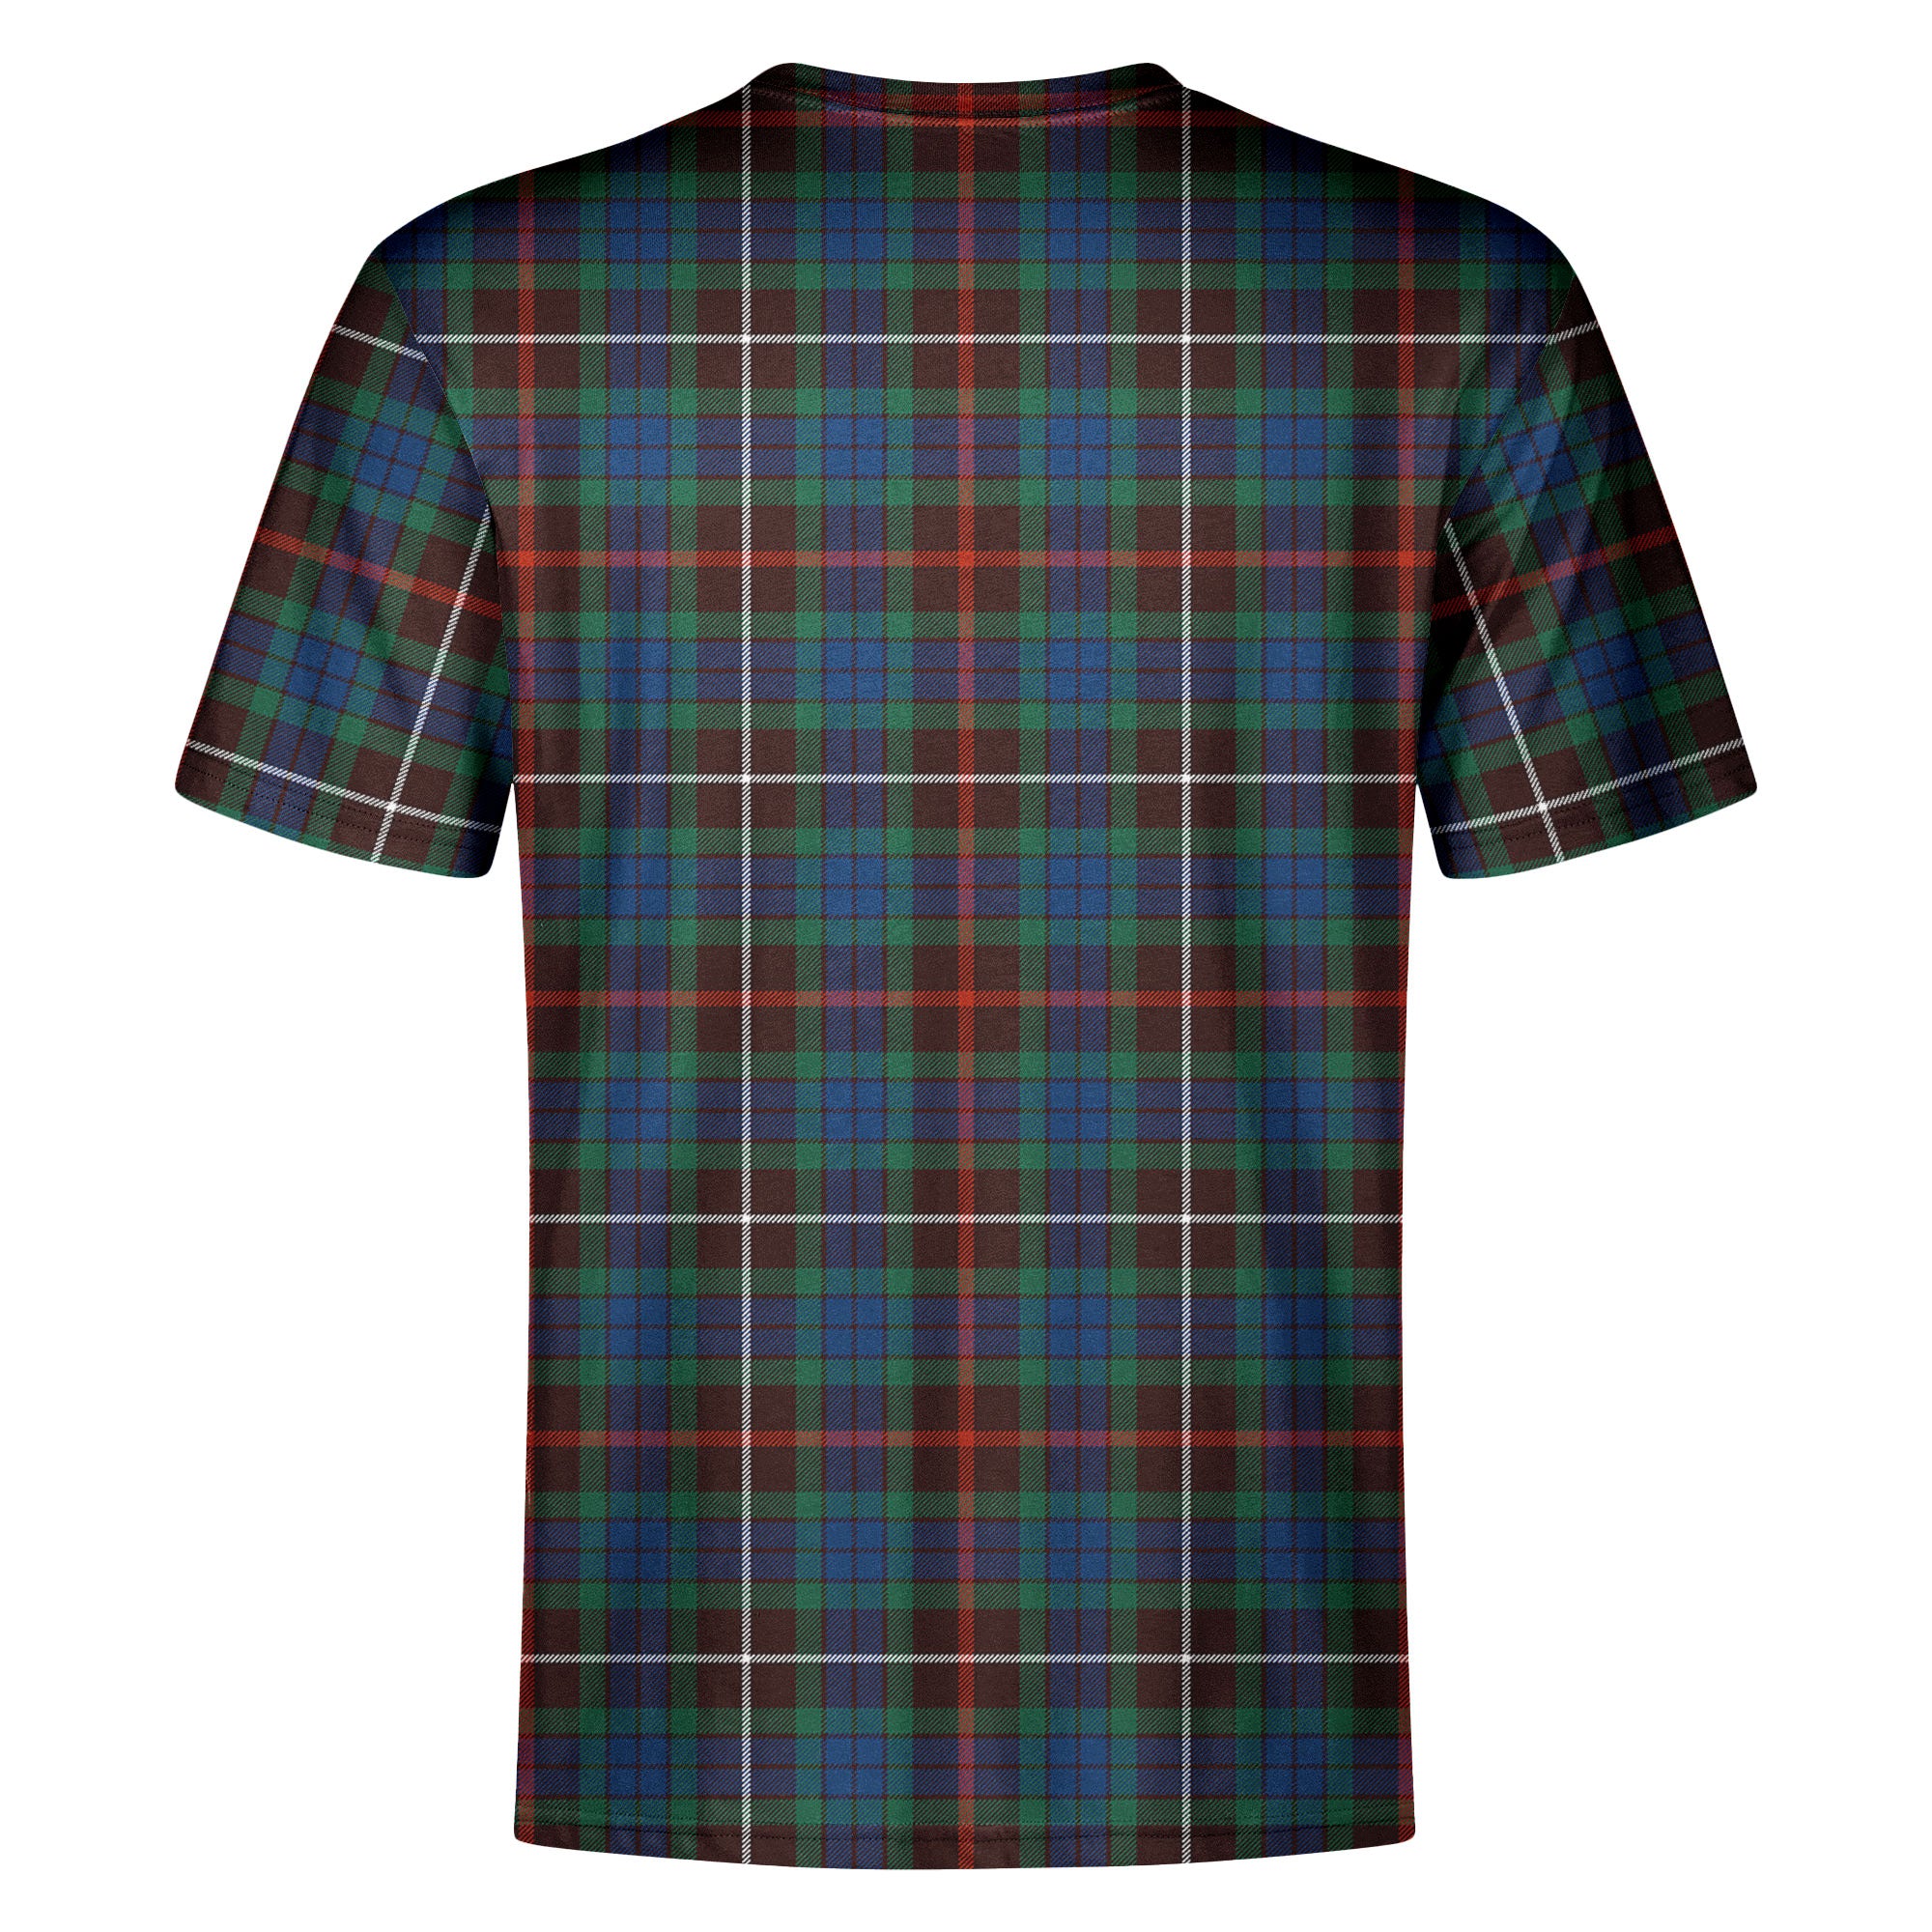 Fraser (of Lovat) Hunting Ancient Tartan Crest T-shirt